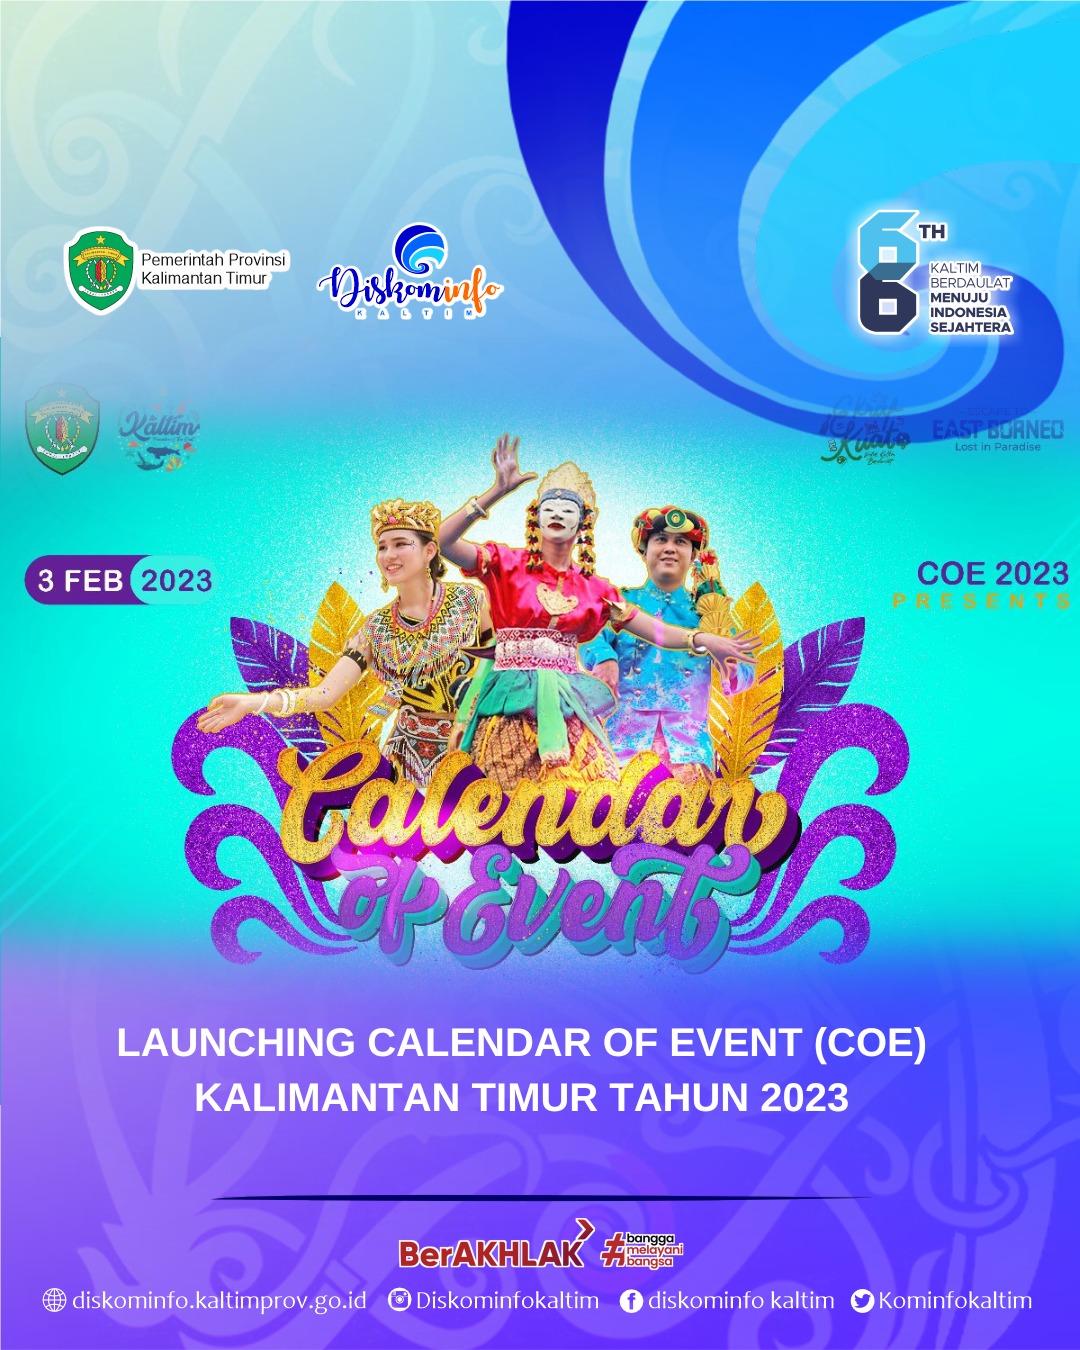 LAUNCHING CALENDAR OF EVENT (COE) KALIMANTAN TIMUR TAHUN 2023